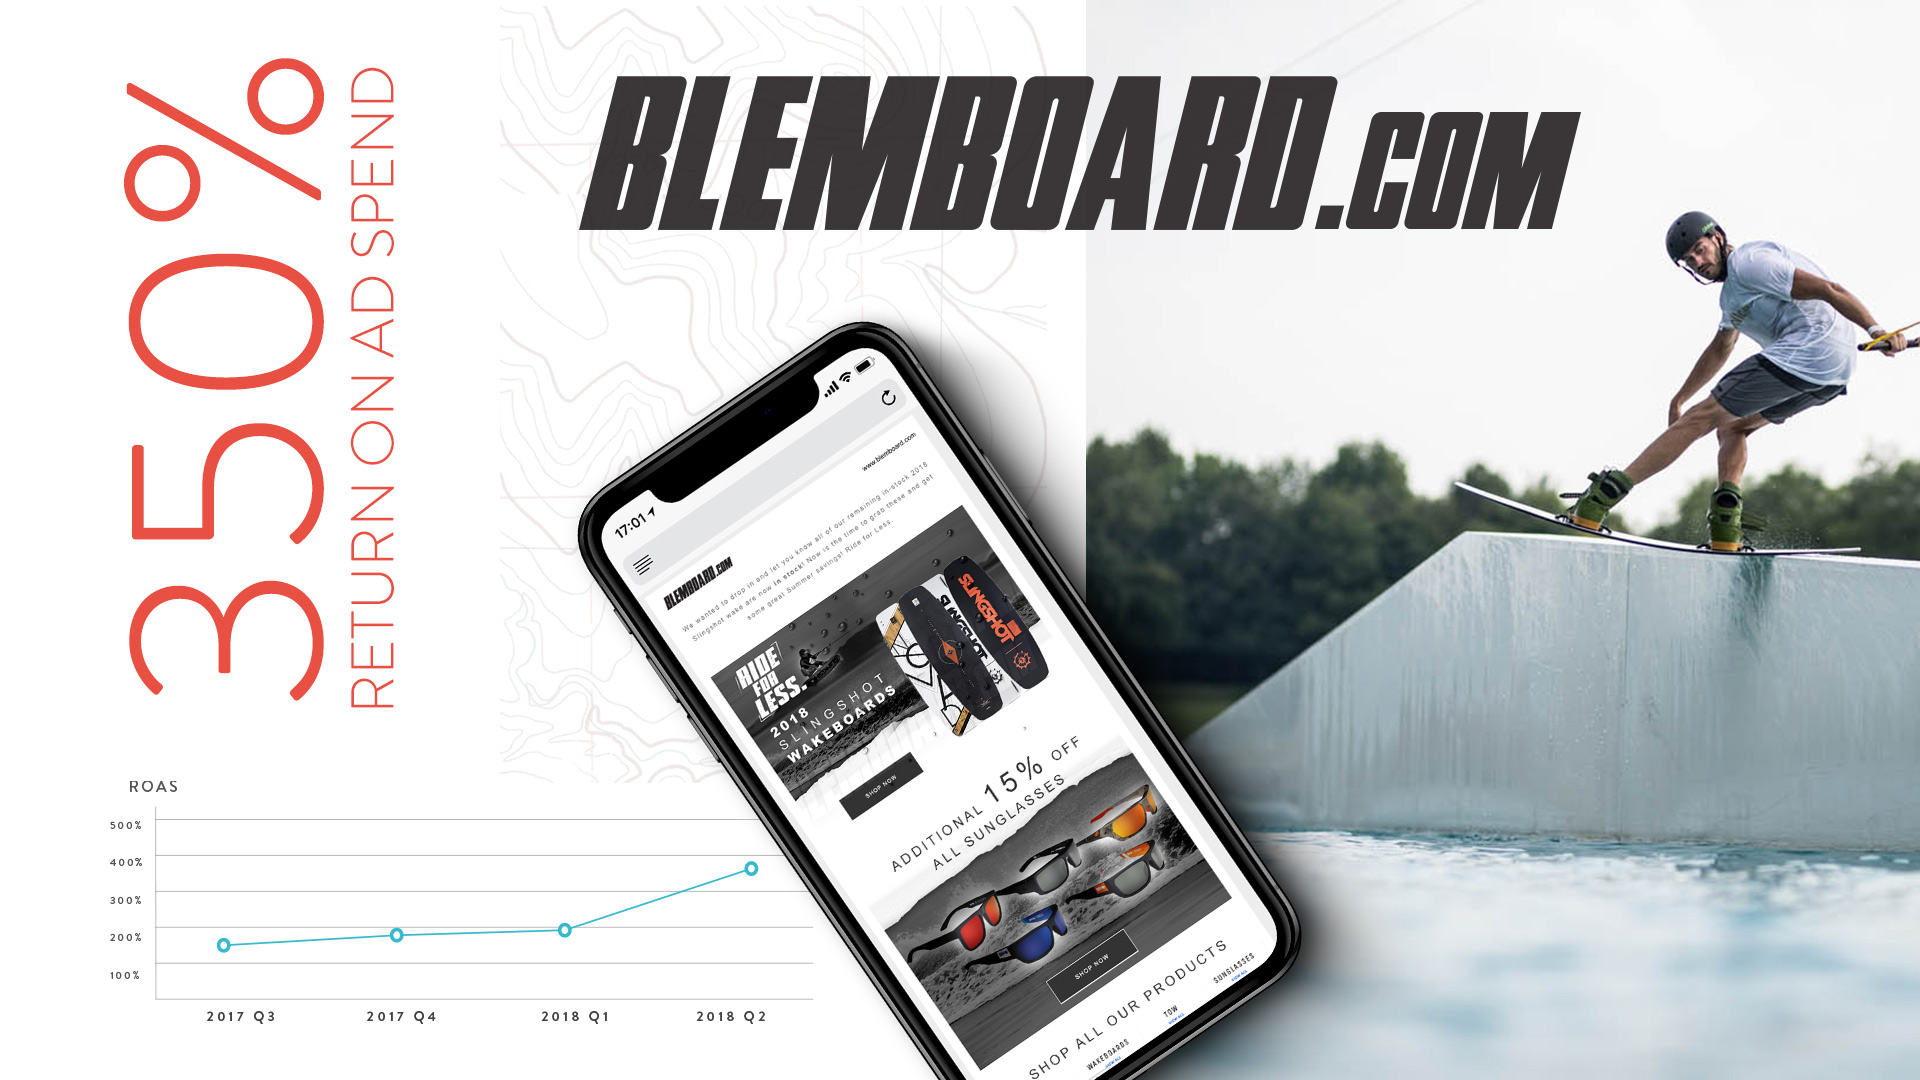 Blemboard Logo